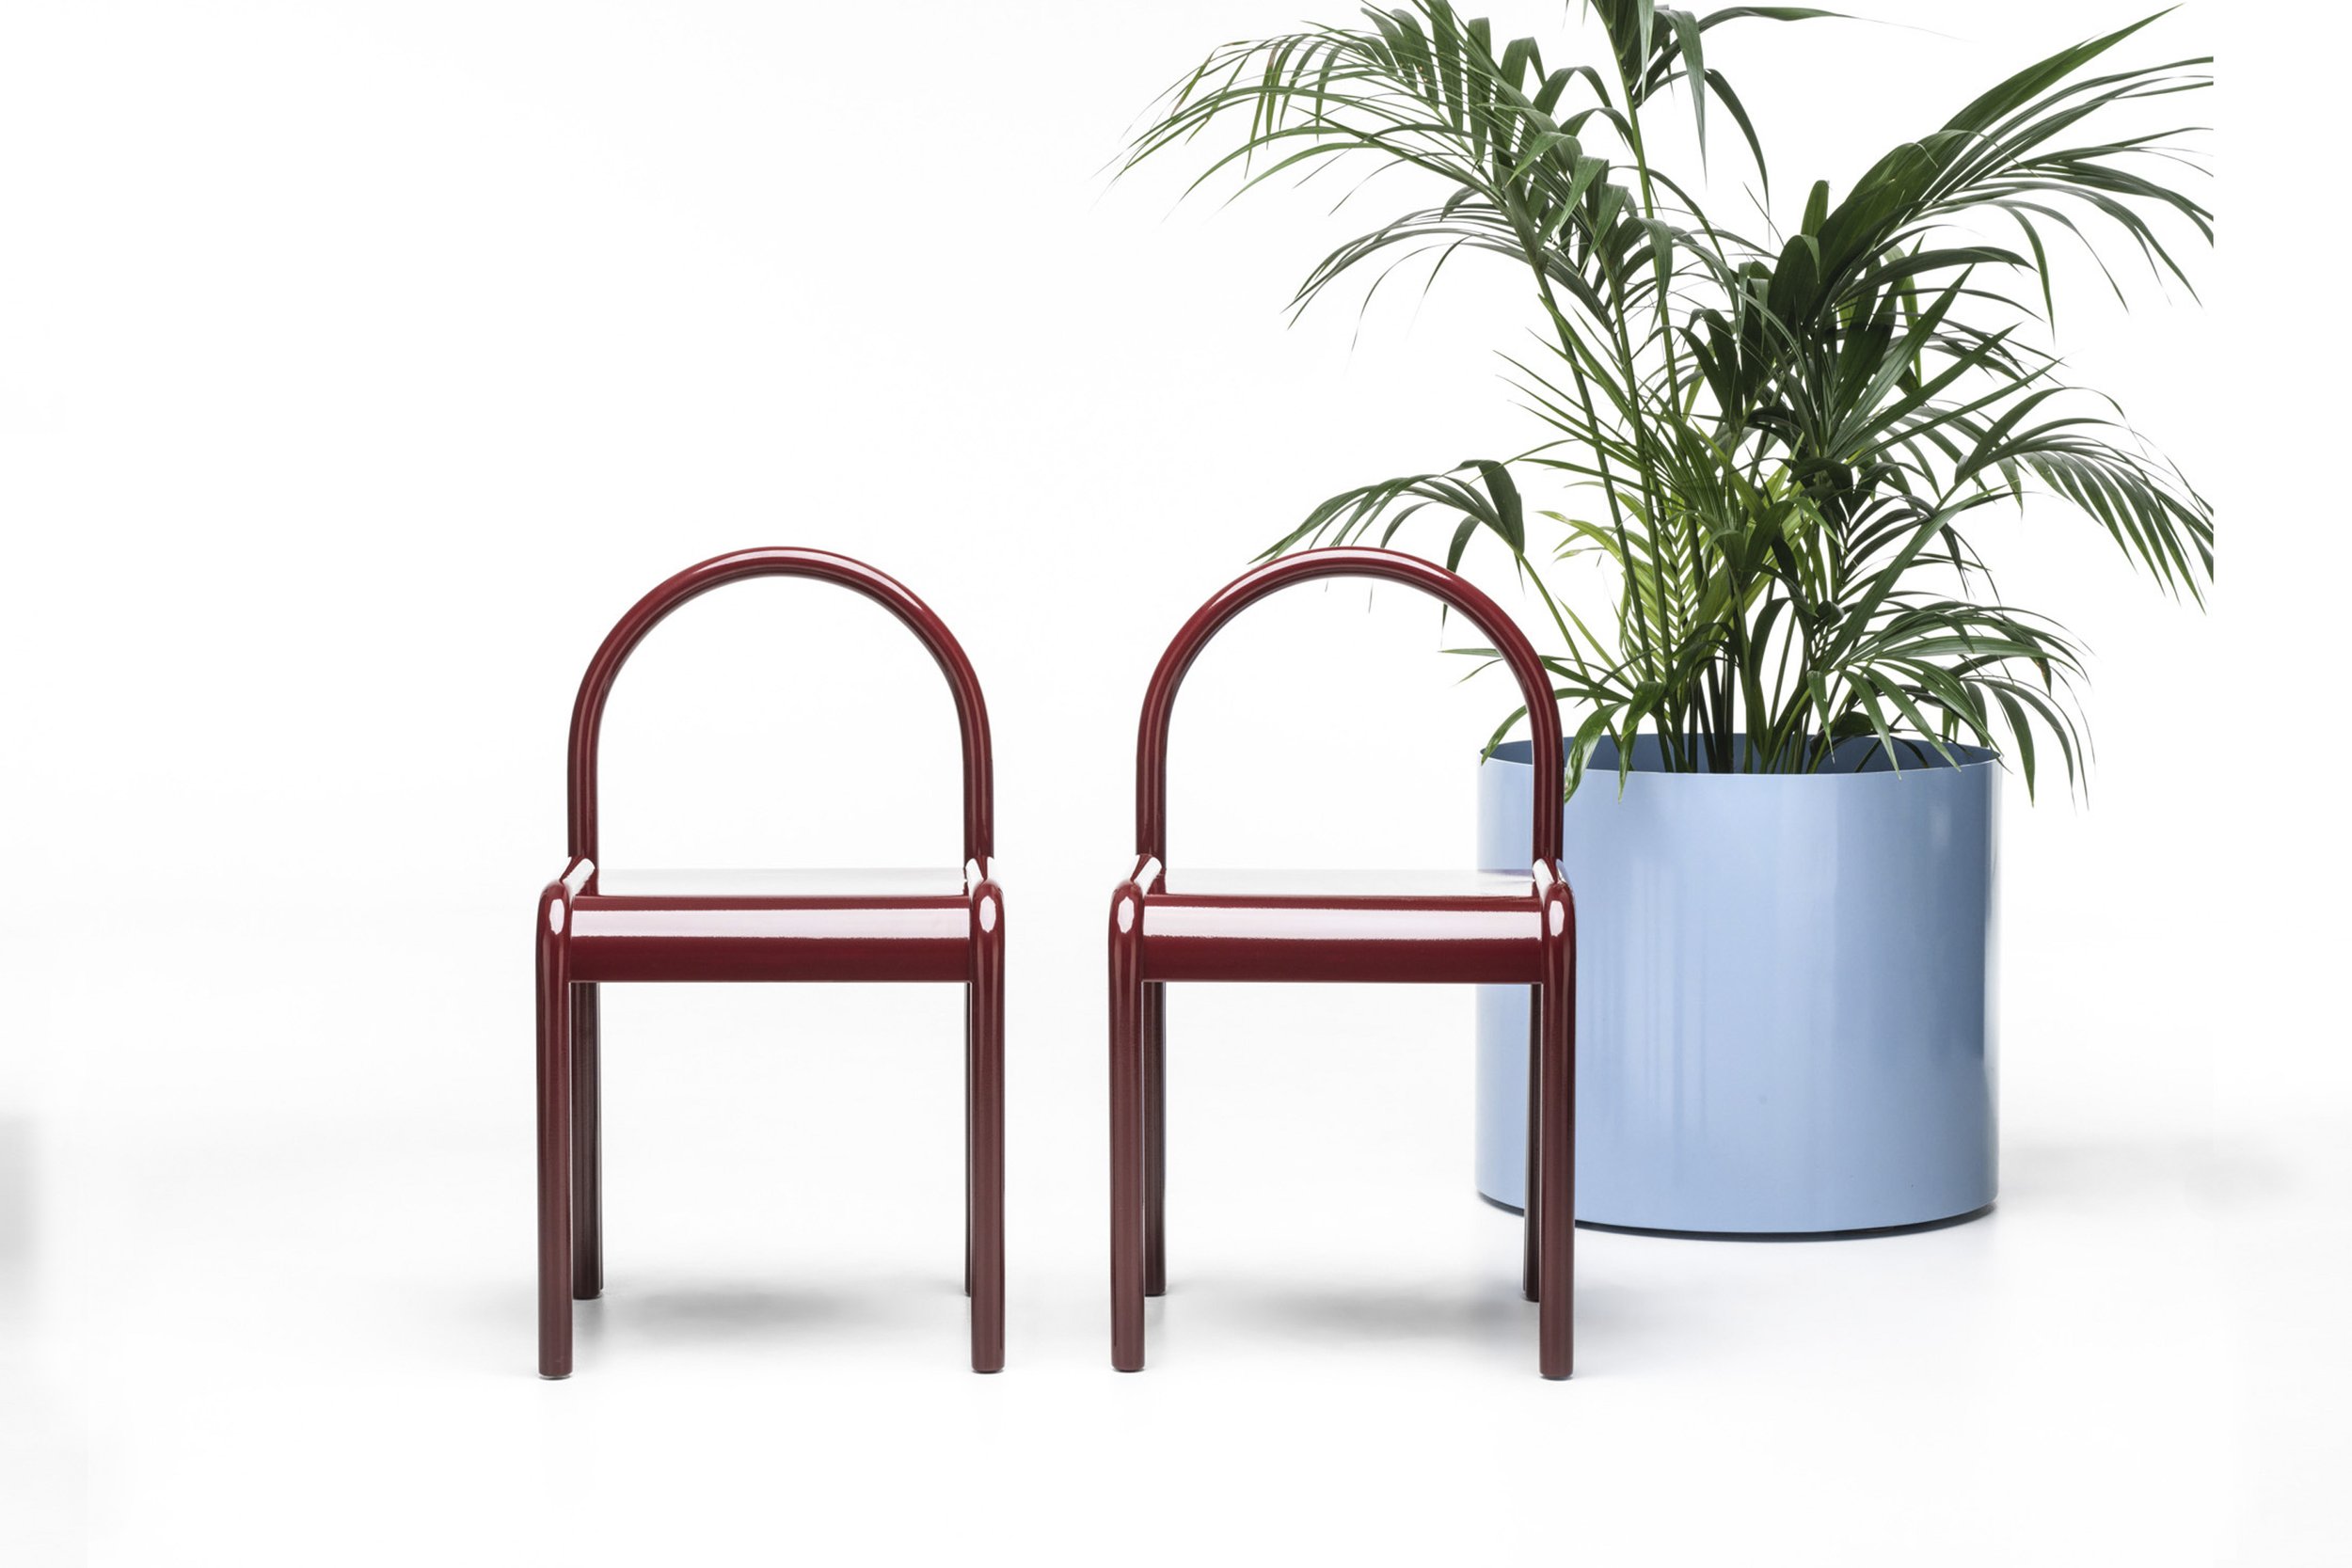 studio-ciao-b5-halo-chairs-planters-plants.jpg